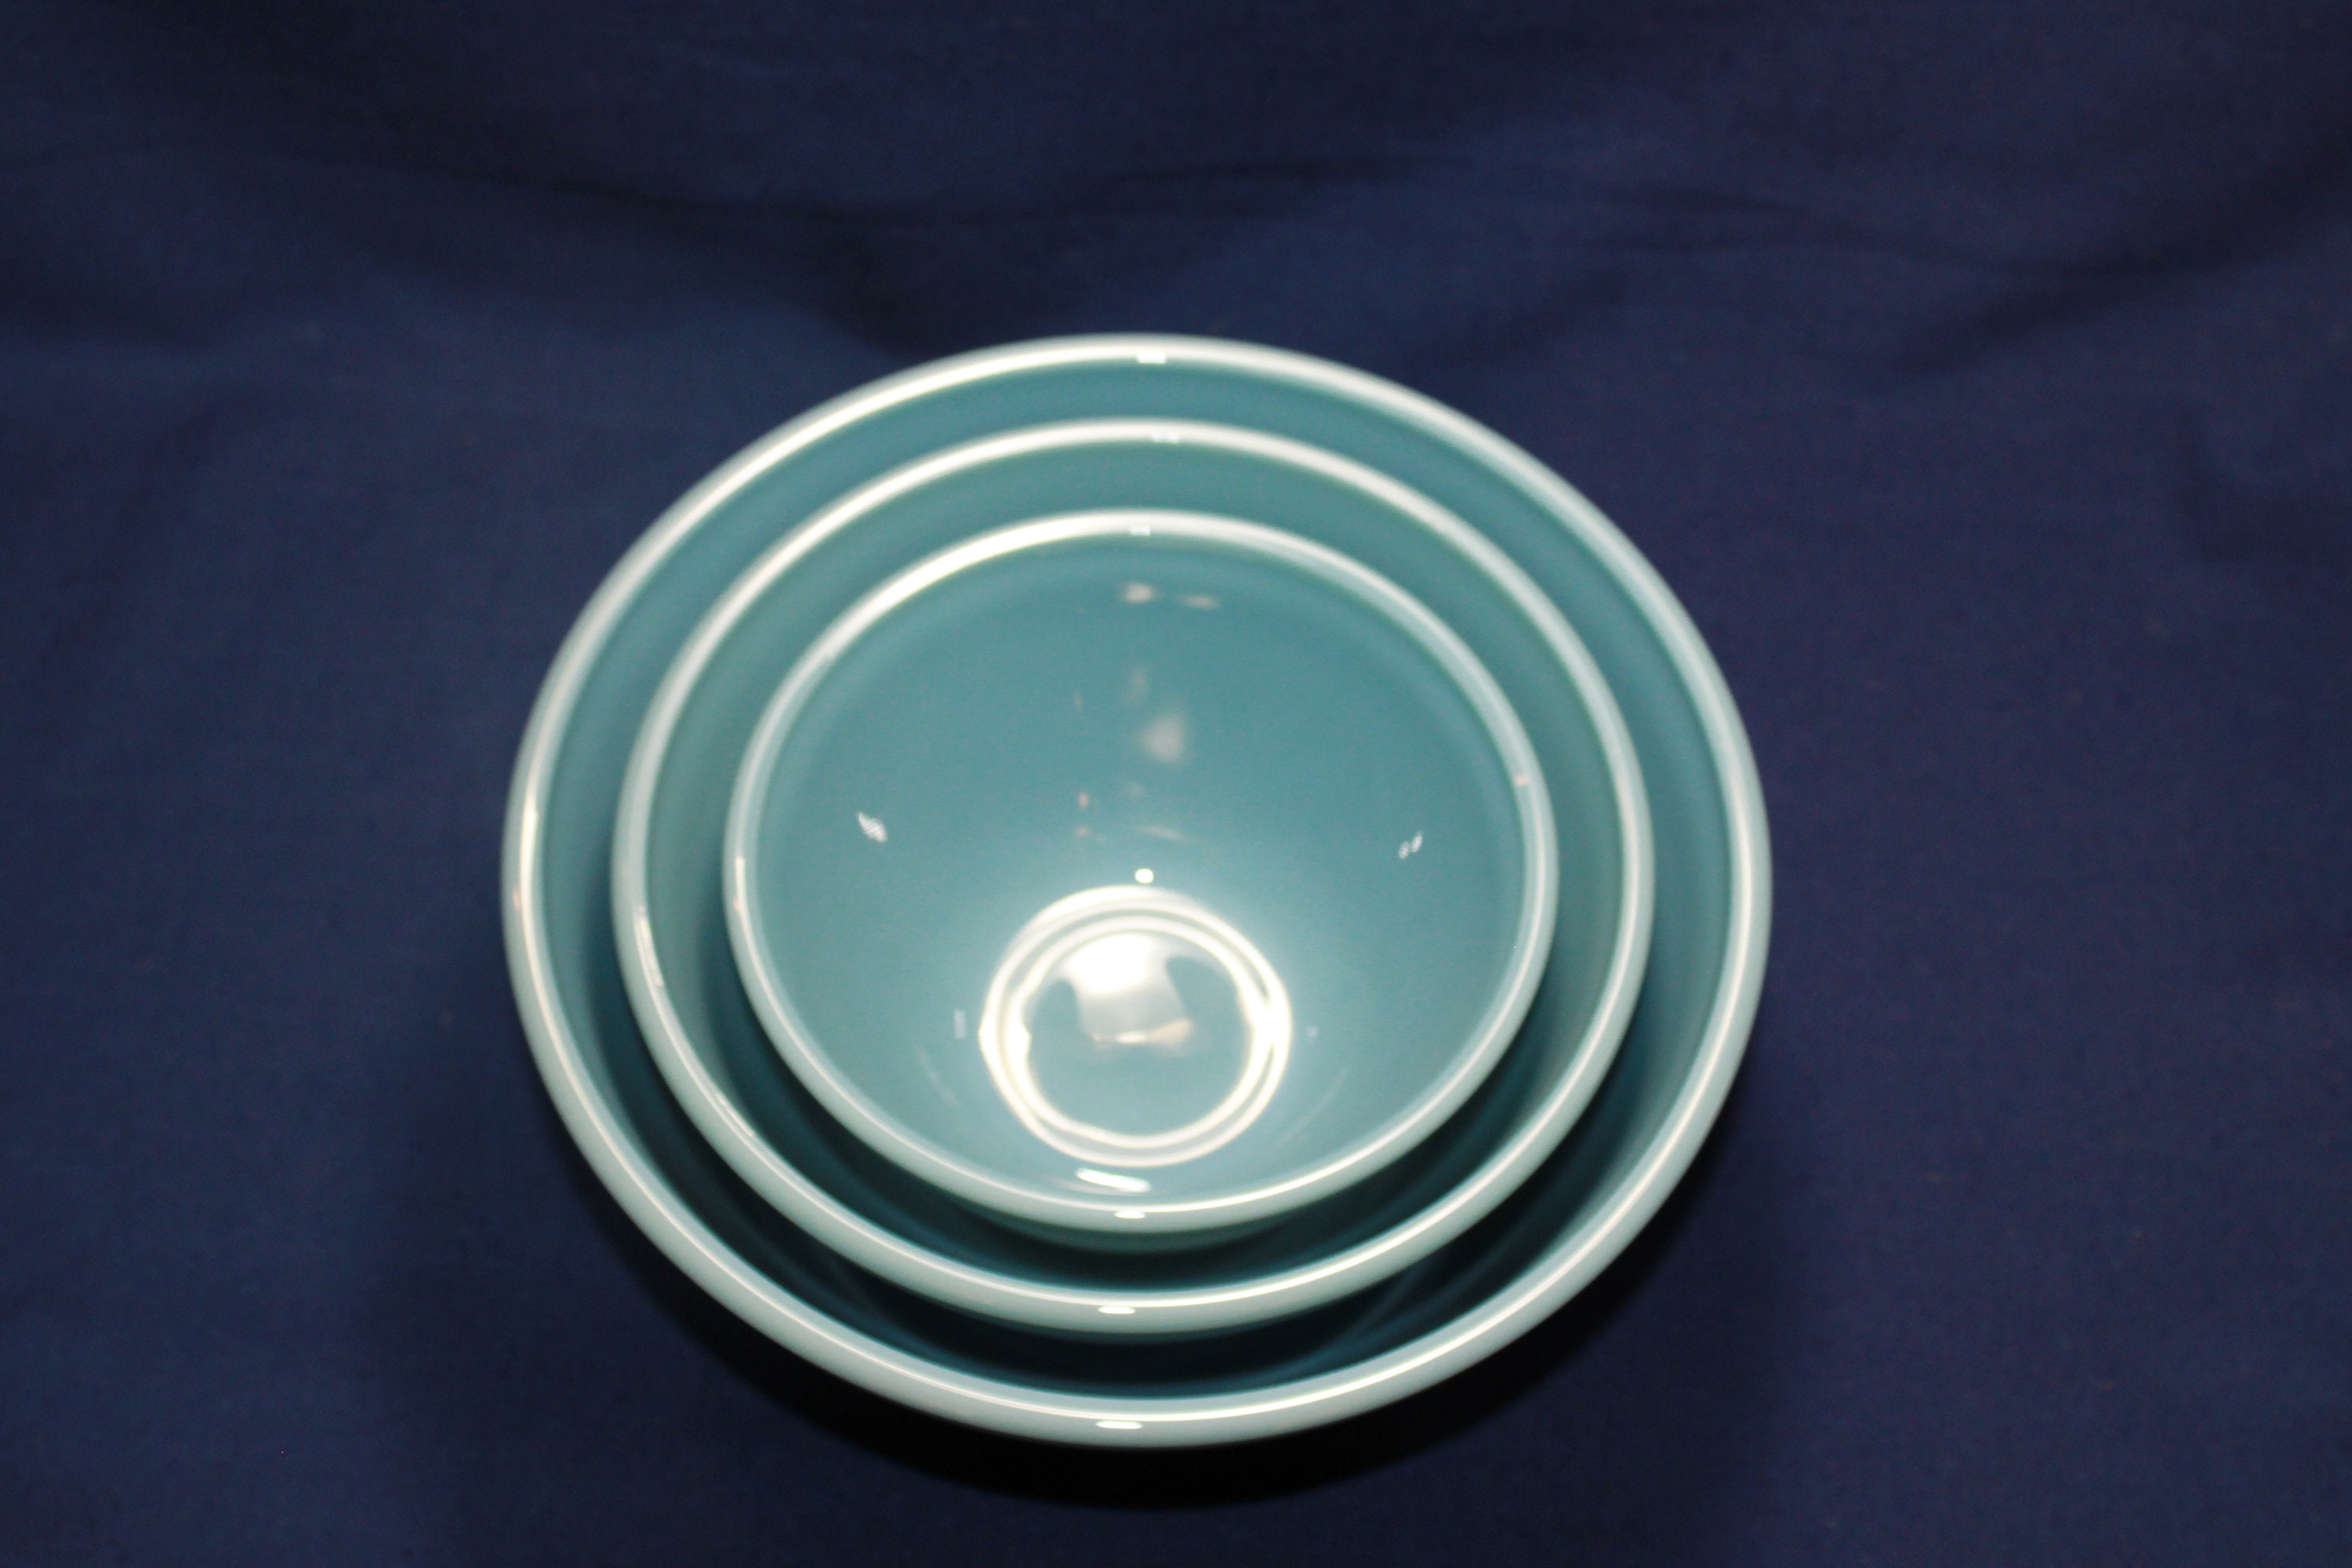 Mosser Glass Georgia Blue Vintage Mixing Bowl Set